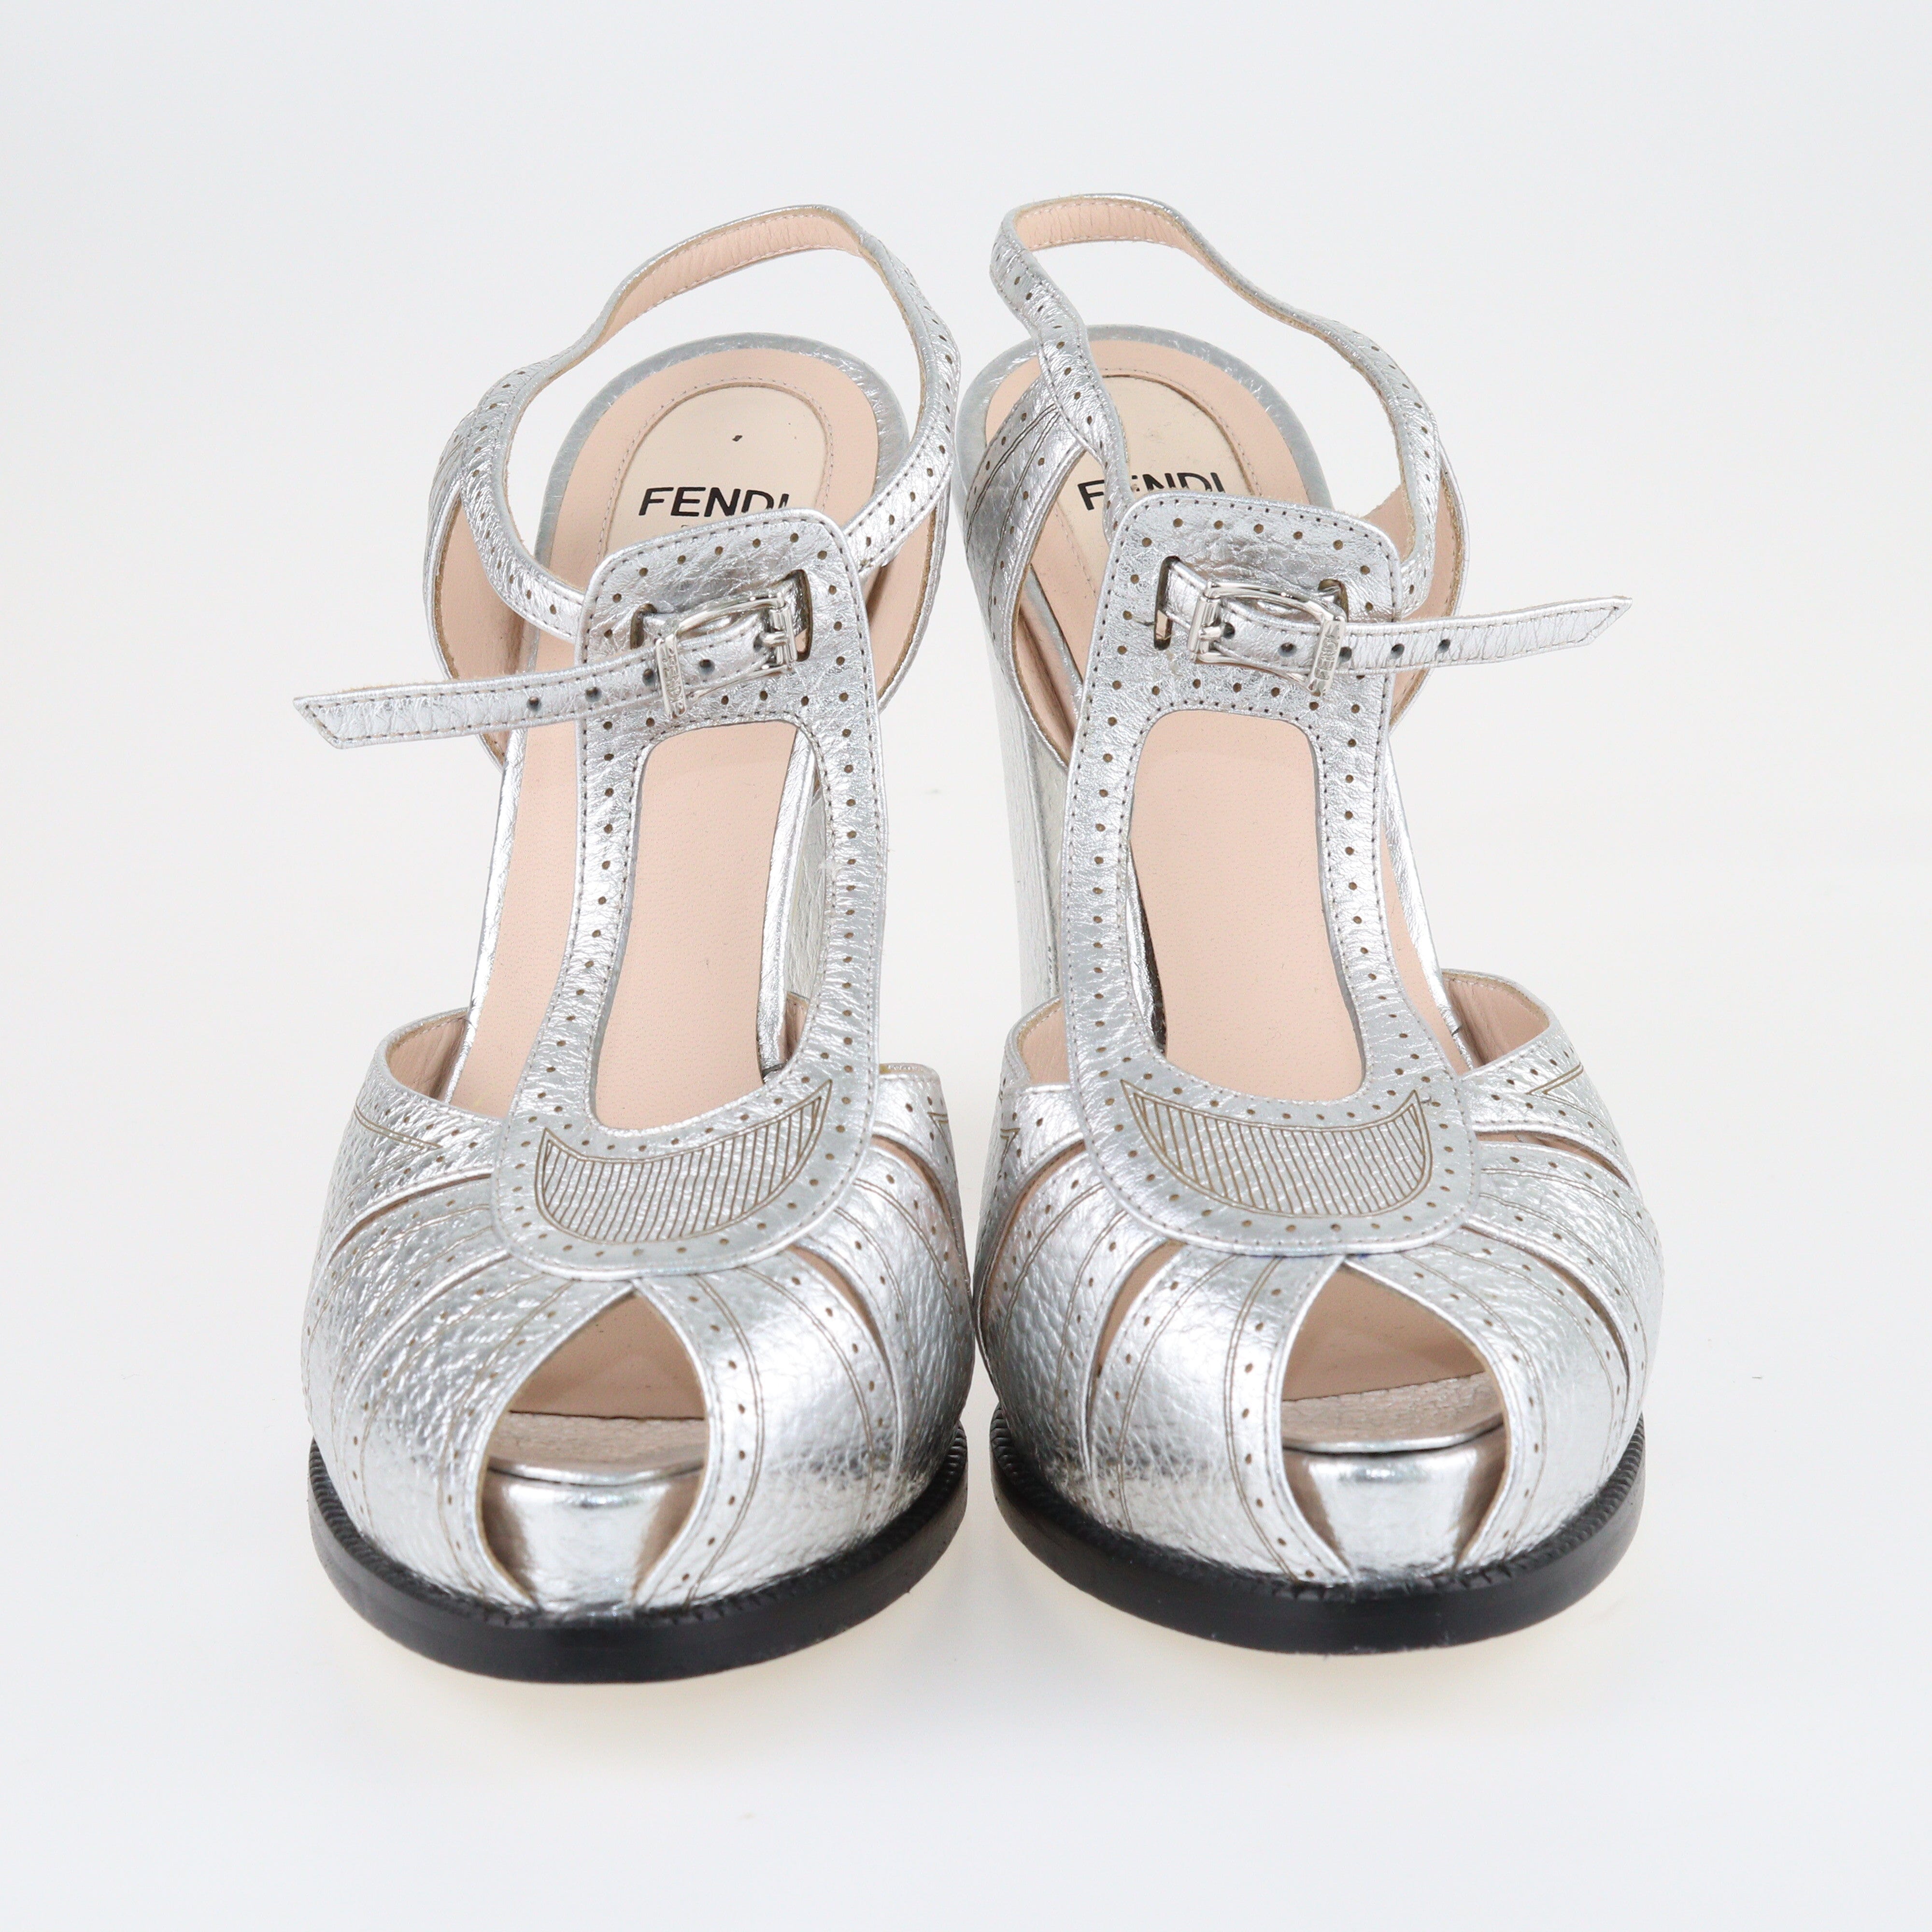 Silver Chameleon Block Heel Sandals Shoes Fendi 